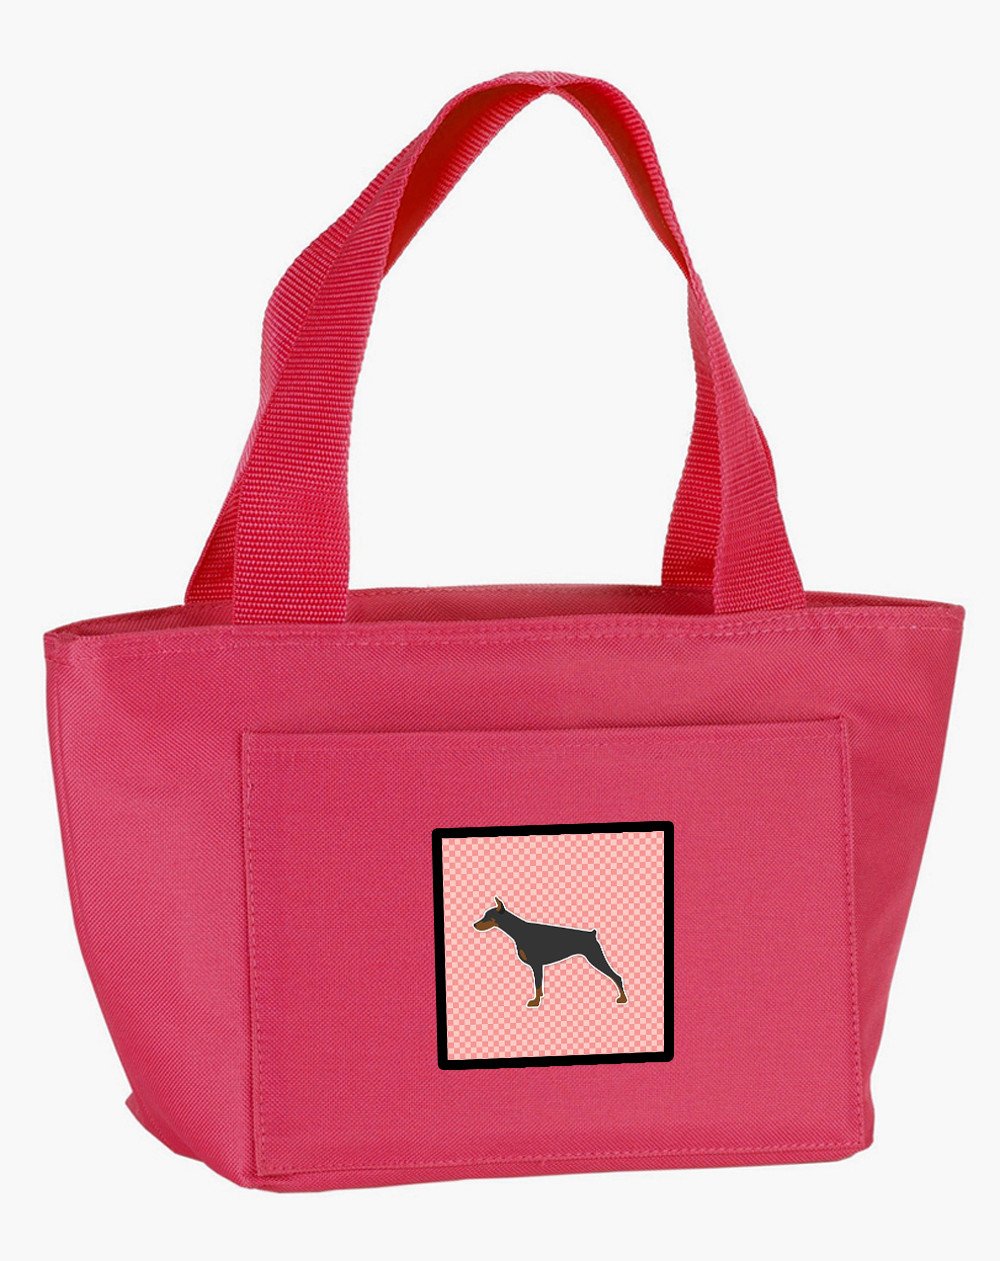 Doberman Pinscher Checkerboard Pink Lunch Bag BB3660PK-8808 by Caroline's Treasures